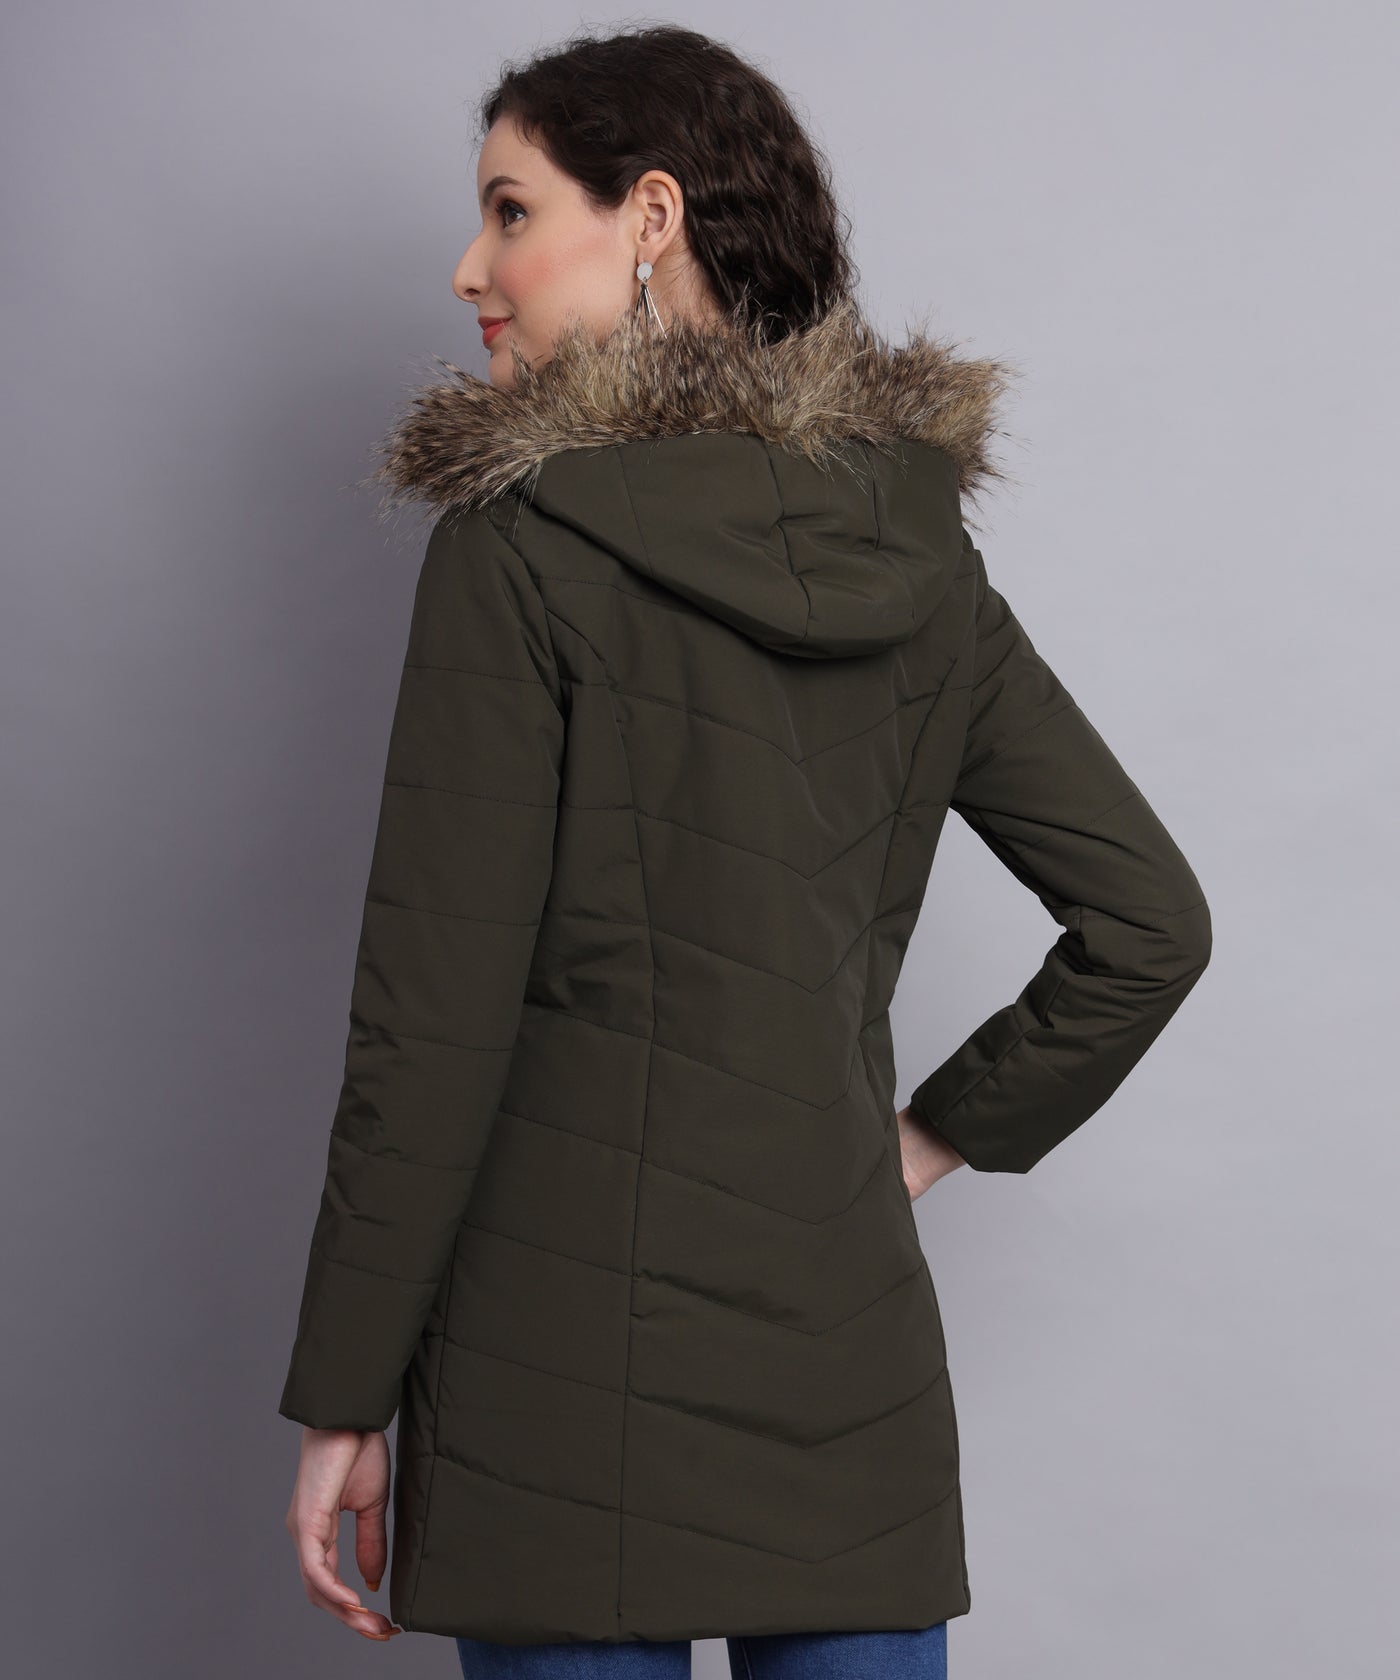 D Olive Medium length jacket-AW6194